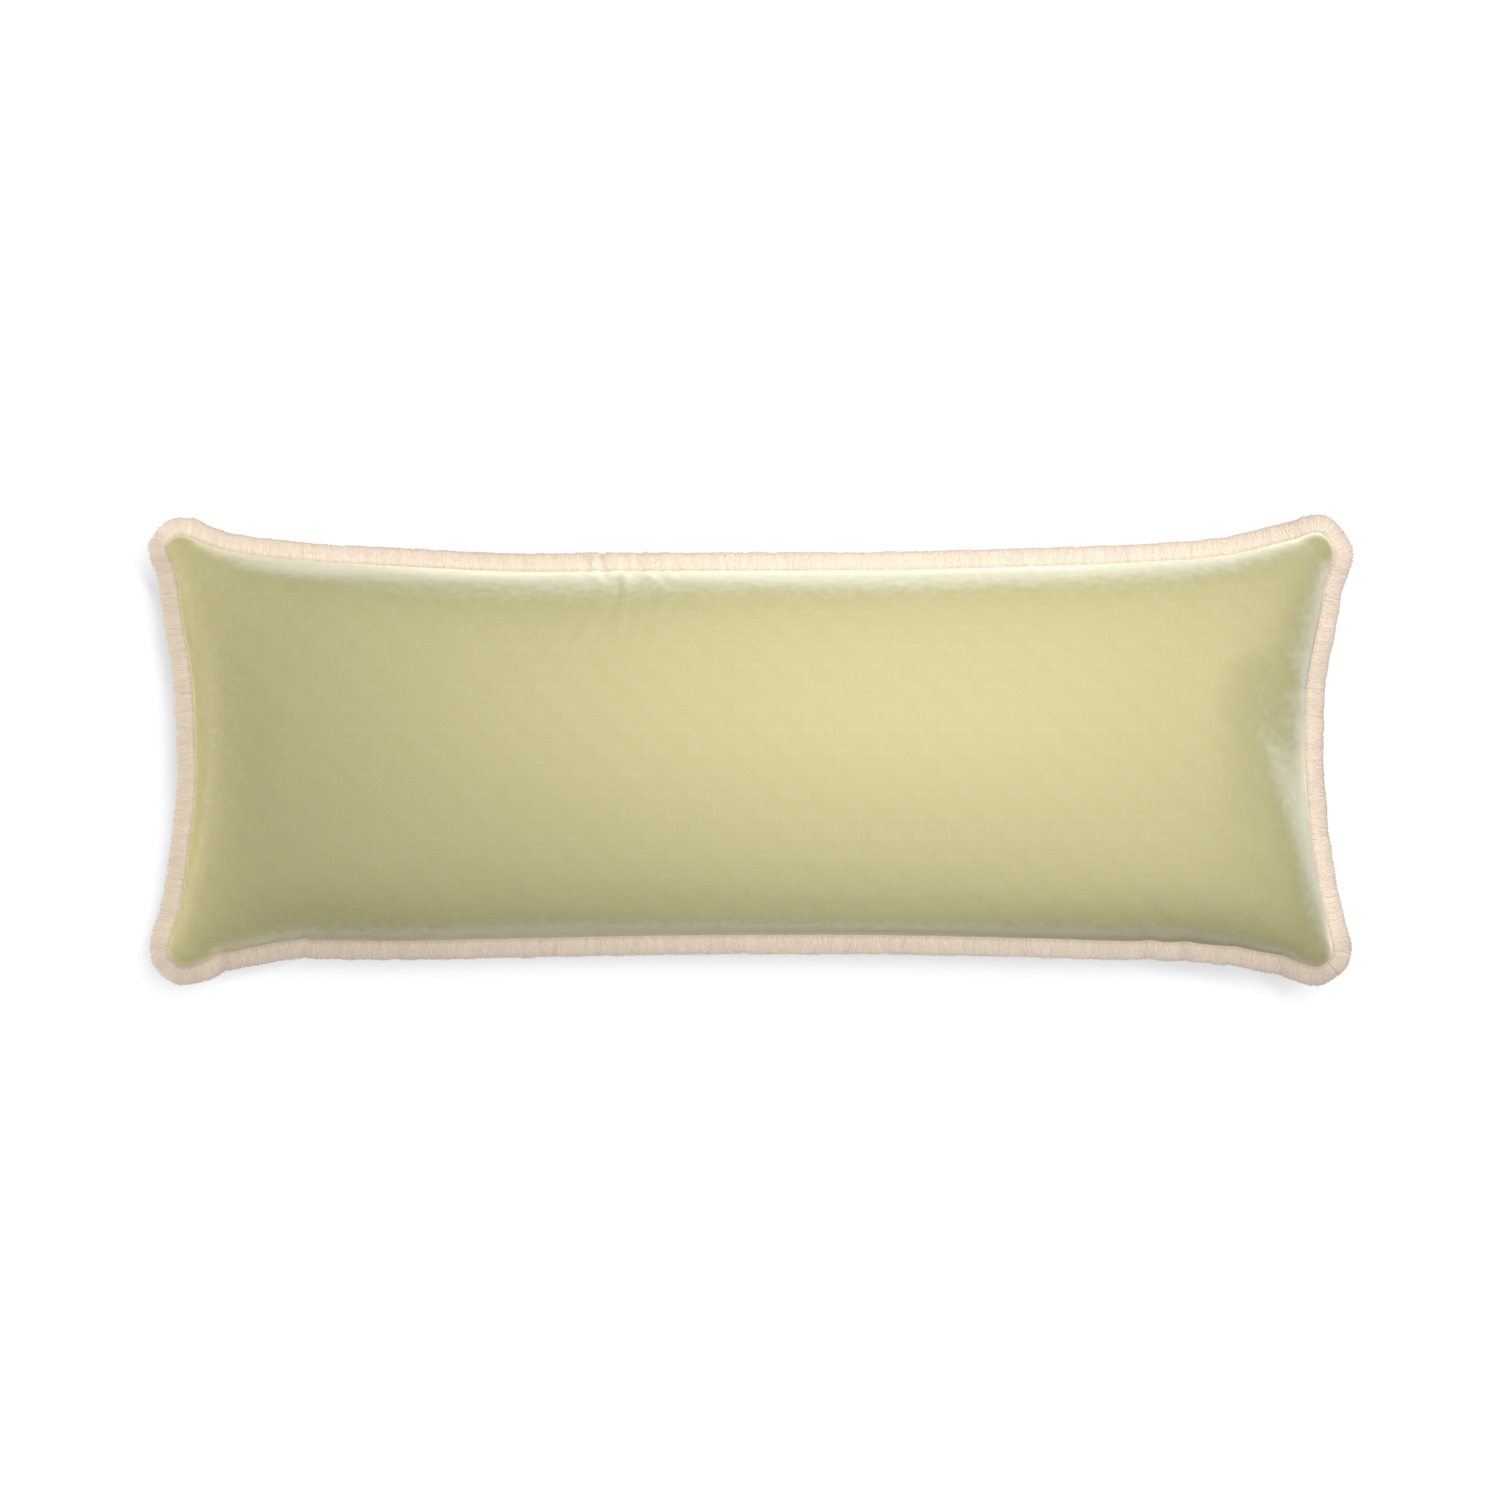 rectangle light green pillow with cream fringe